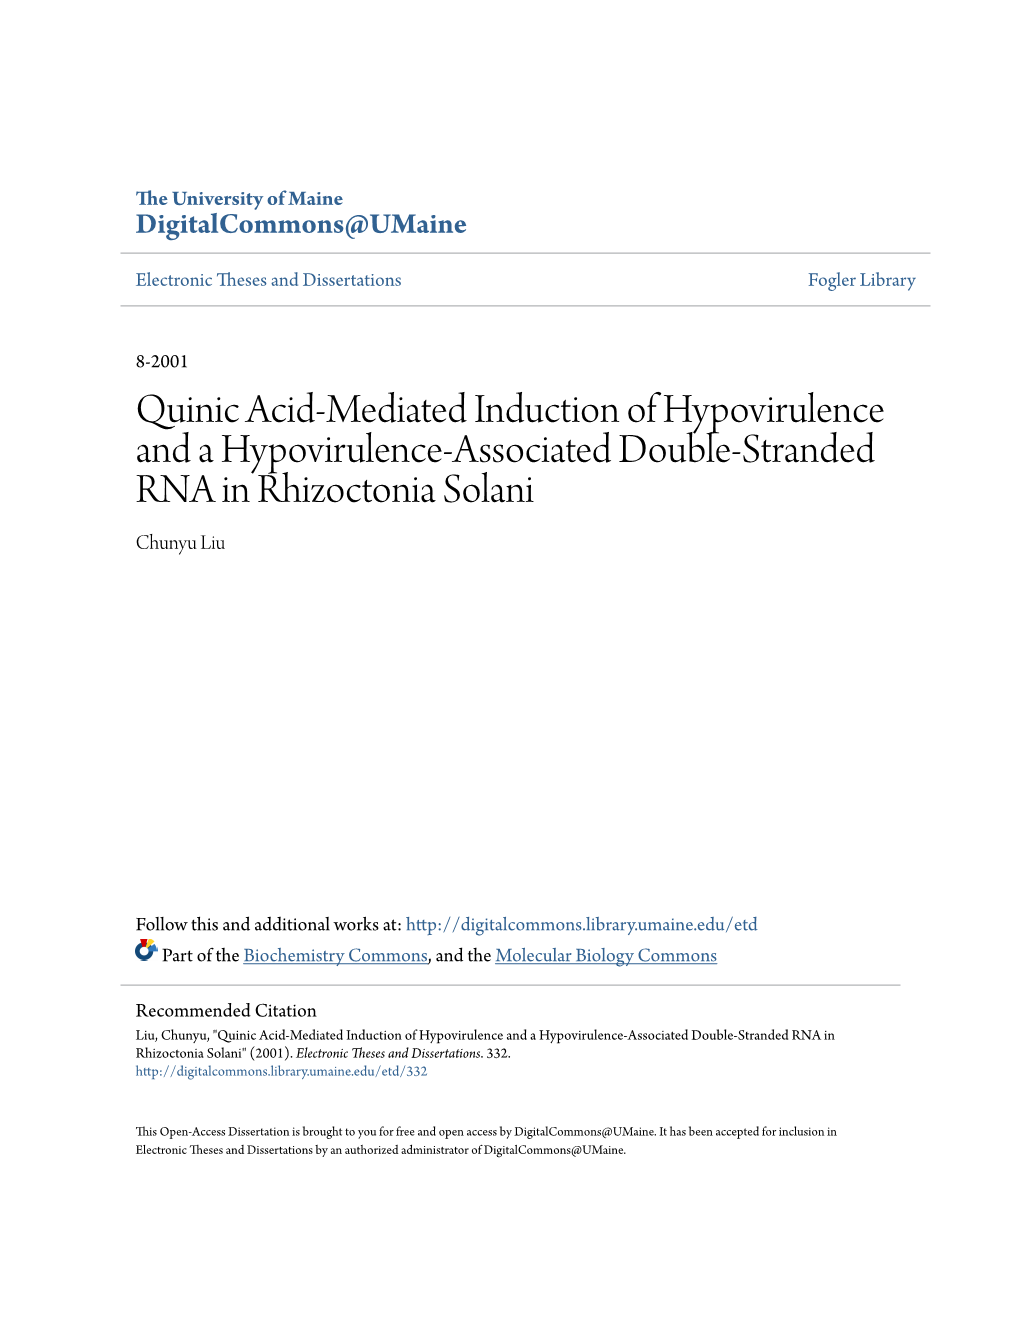 Quinic Acid-Mediated Induction of Hypovirulence and a Hypovirulence-Associated Double-Stranded RNA in Rhizoctonia Solani Chunyu Liu